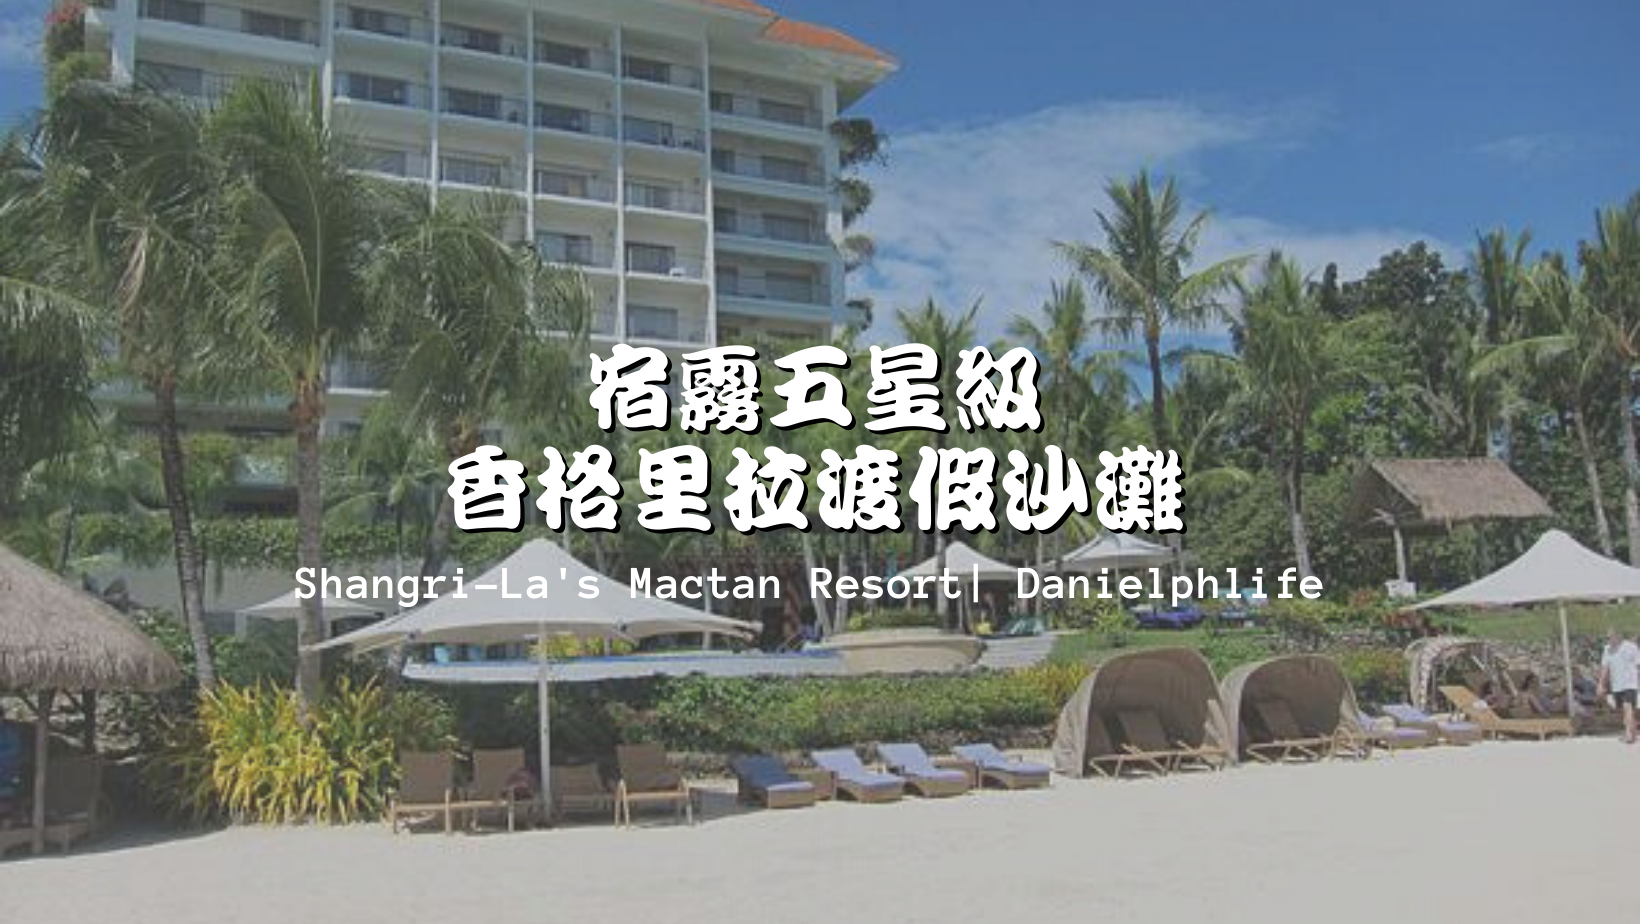 Shangri-La's Mactan Resort